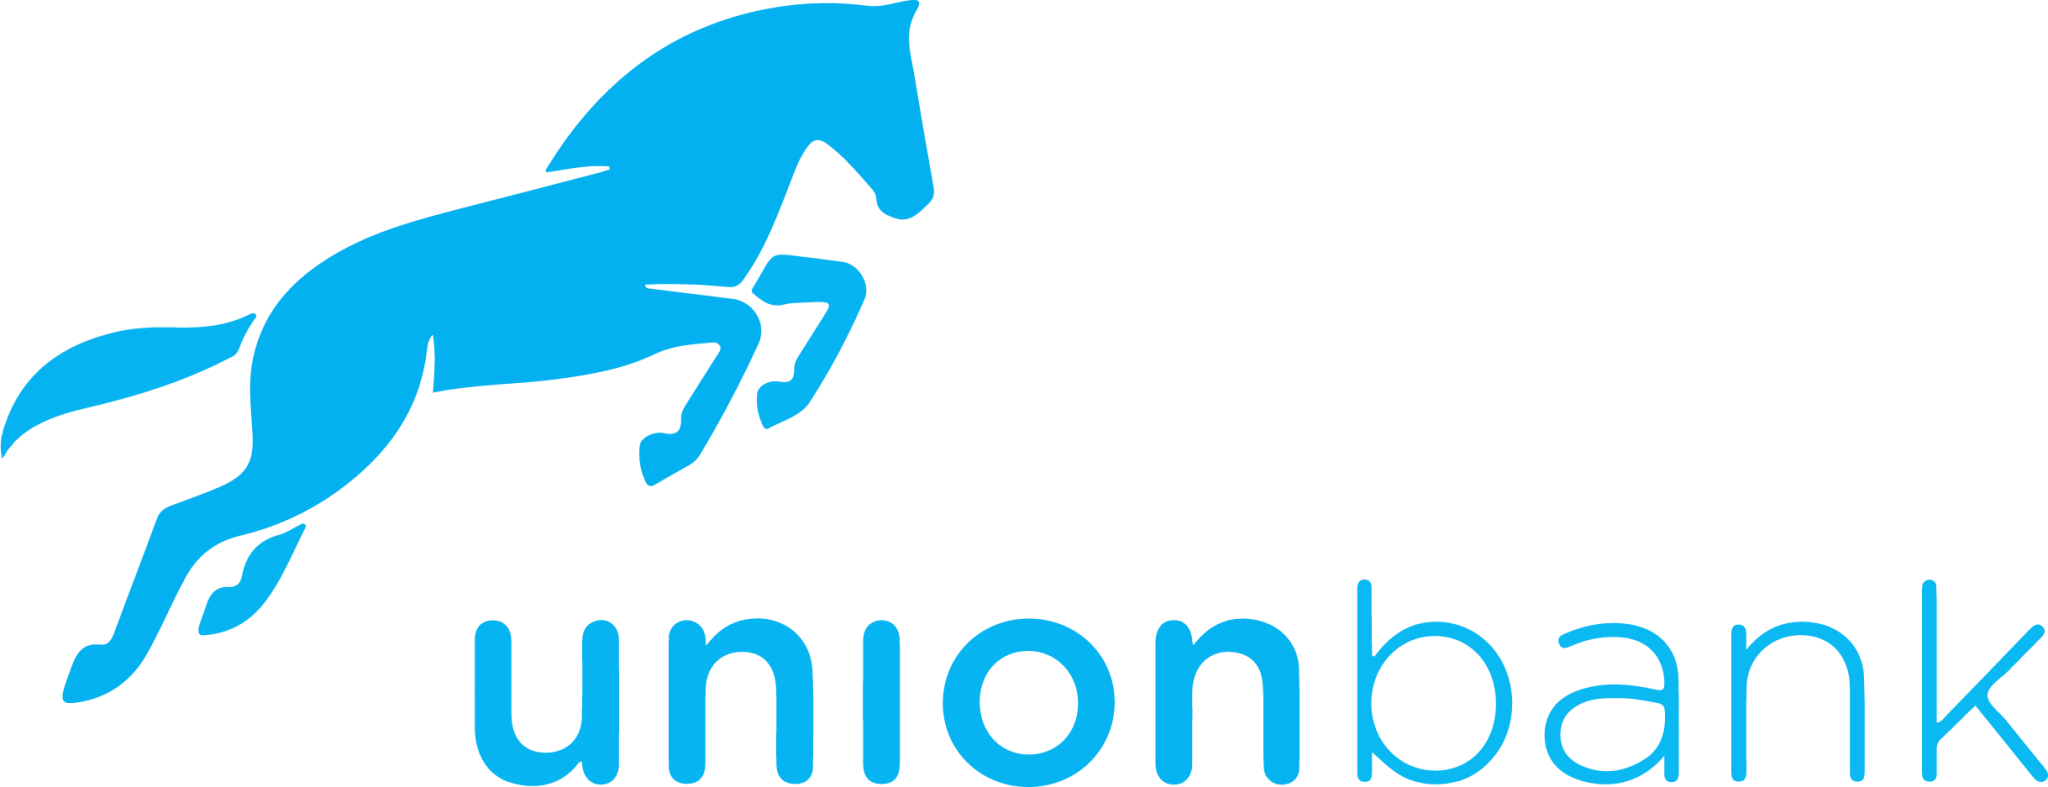 Union Bank Logo - Union Bank Nigeria